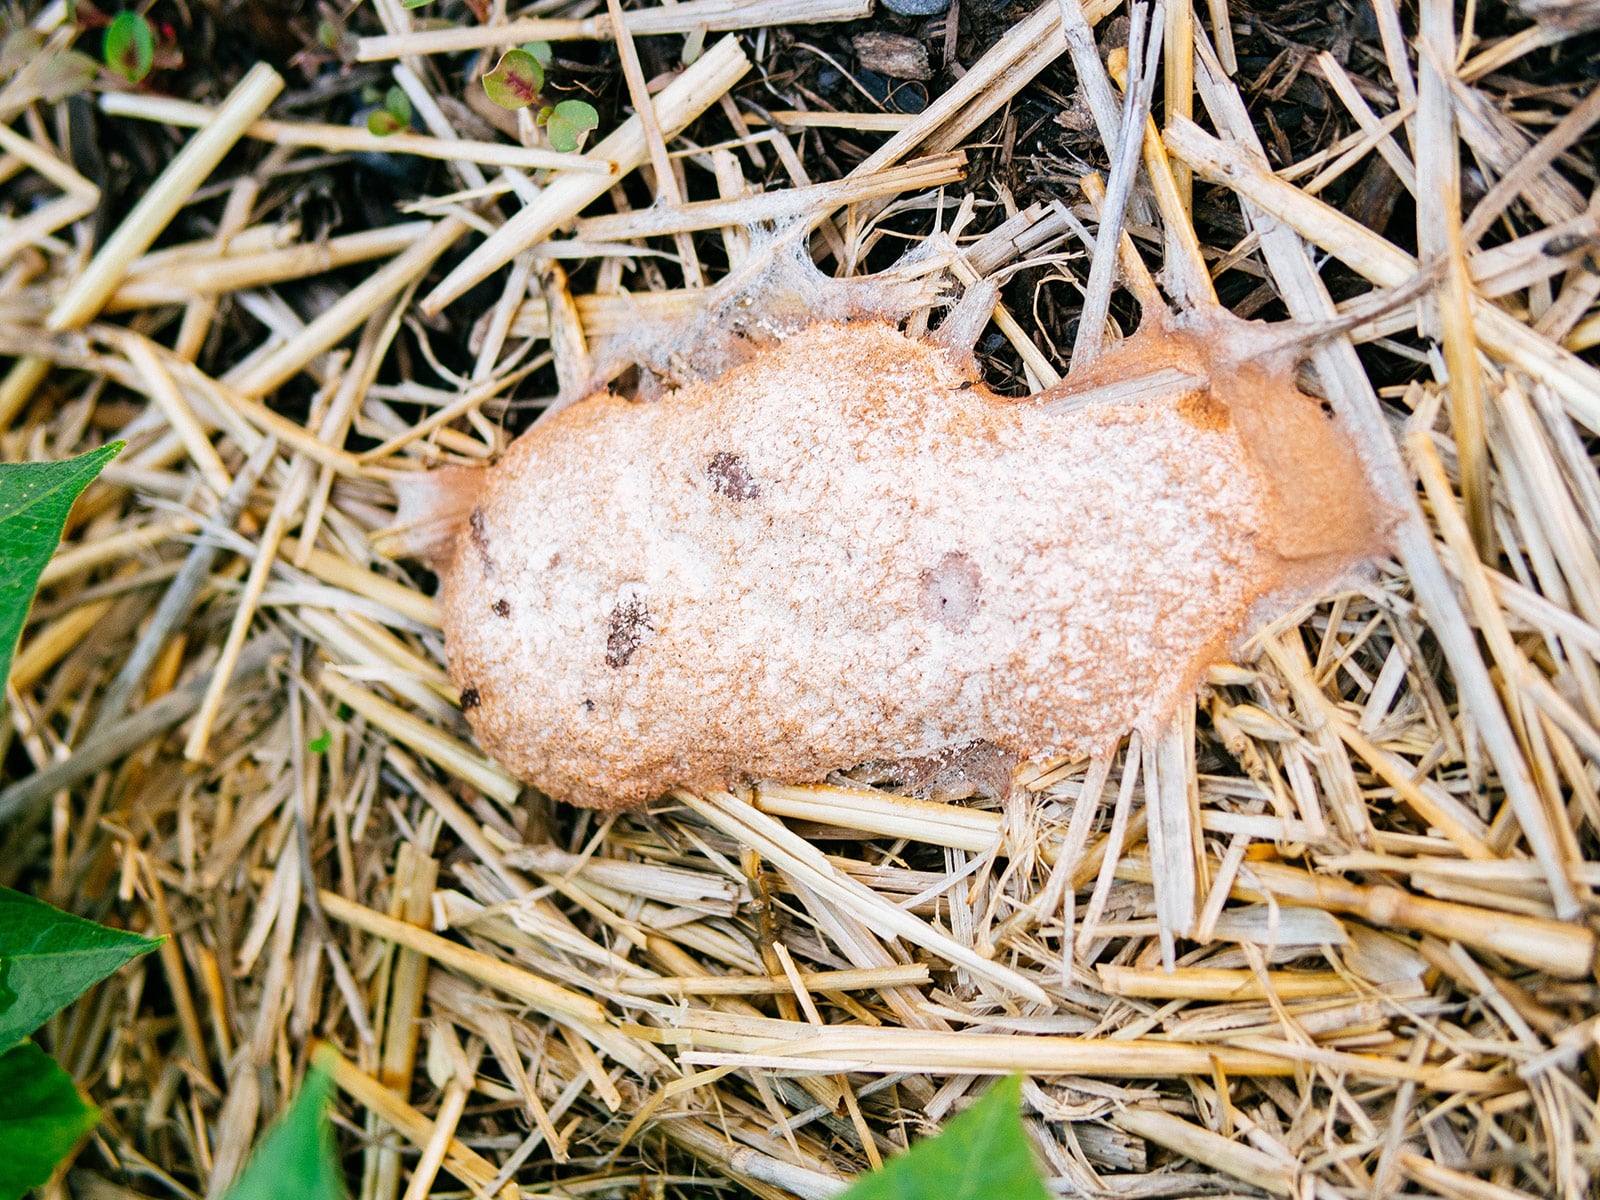 Dog vomit fungus (Fuligo septicai) growing in straw mulch in a garden